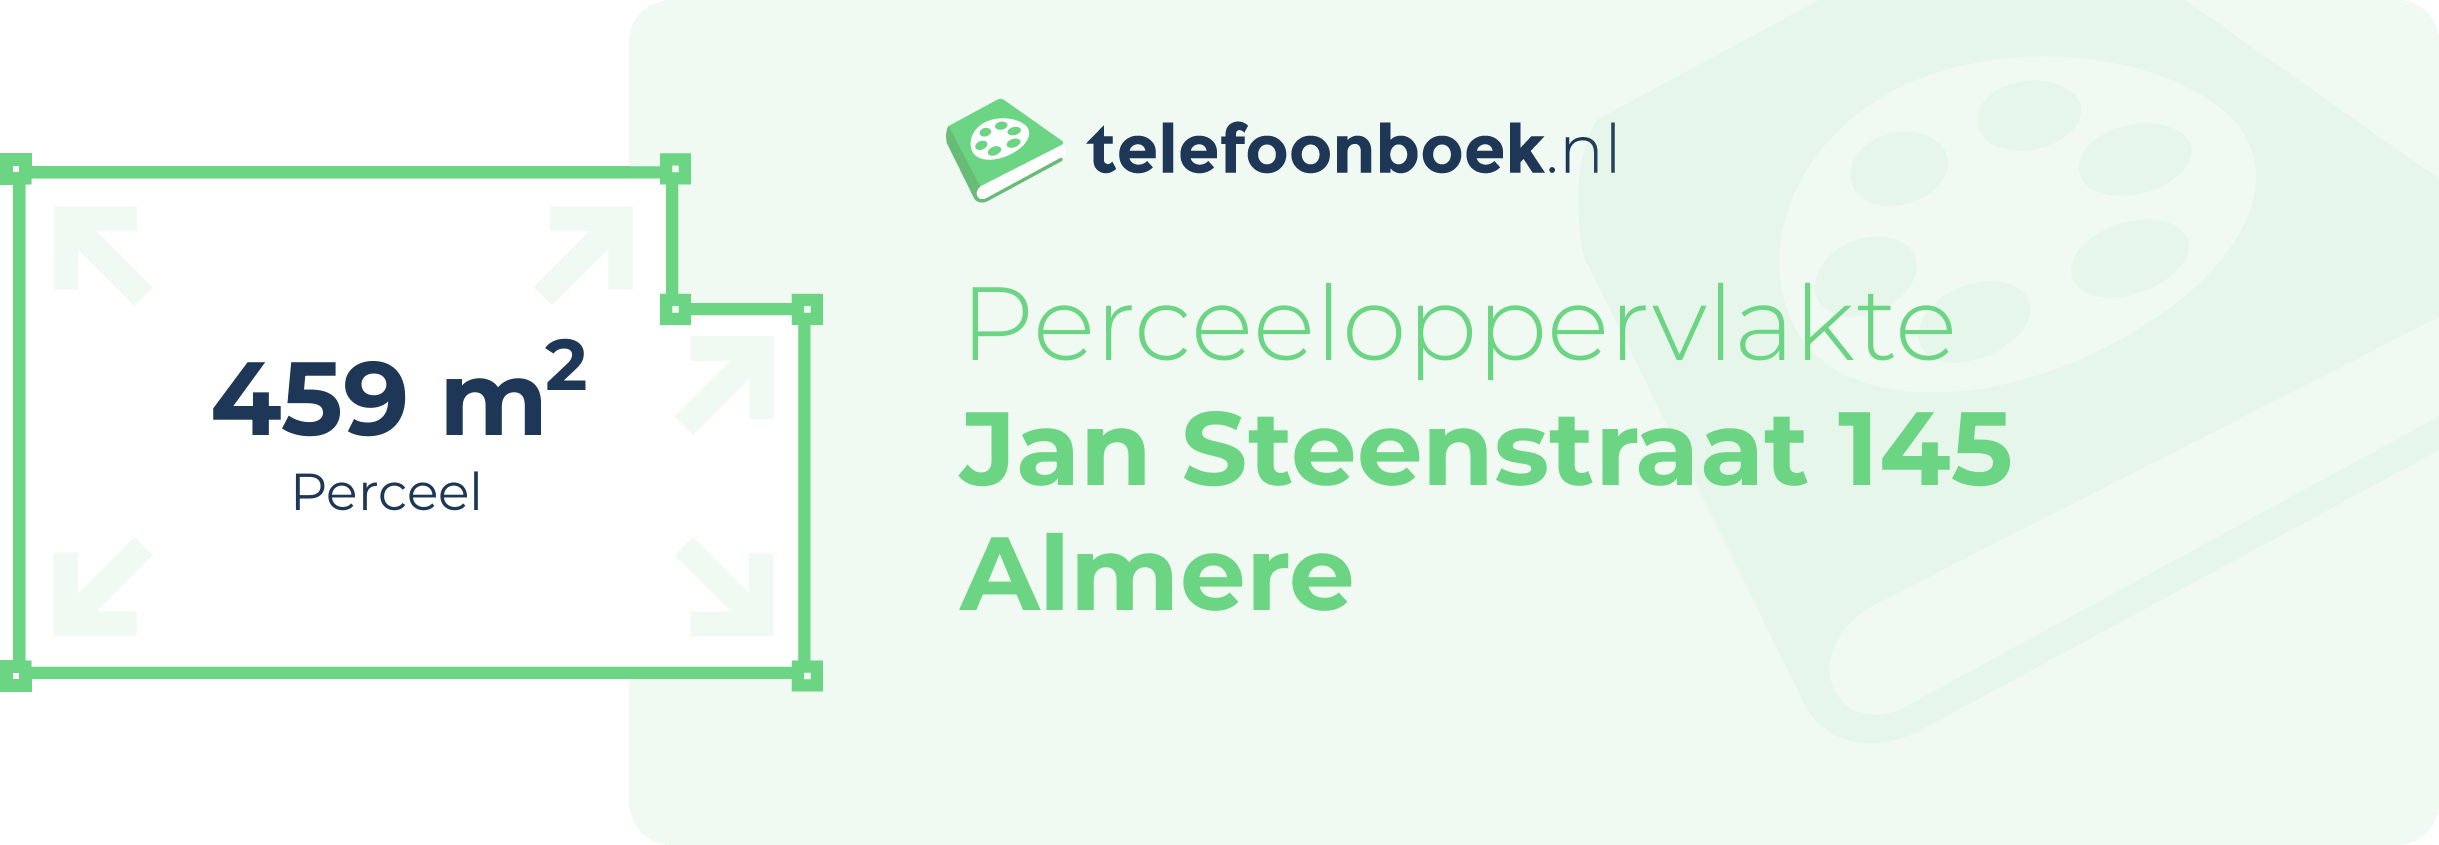 Perceeloppervlakte Jan Steenstraat 145 Almere